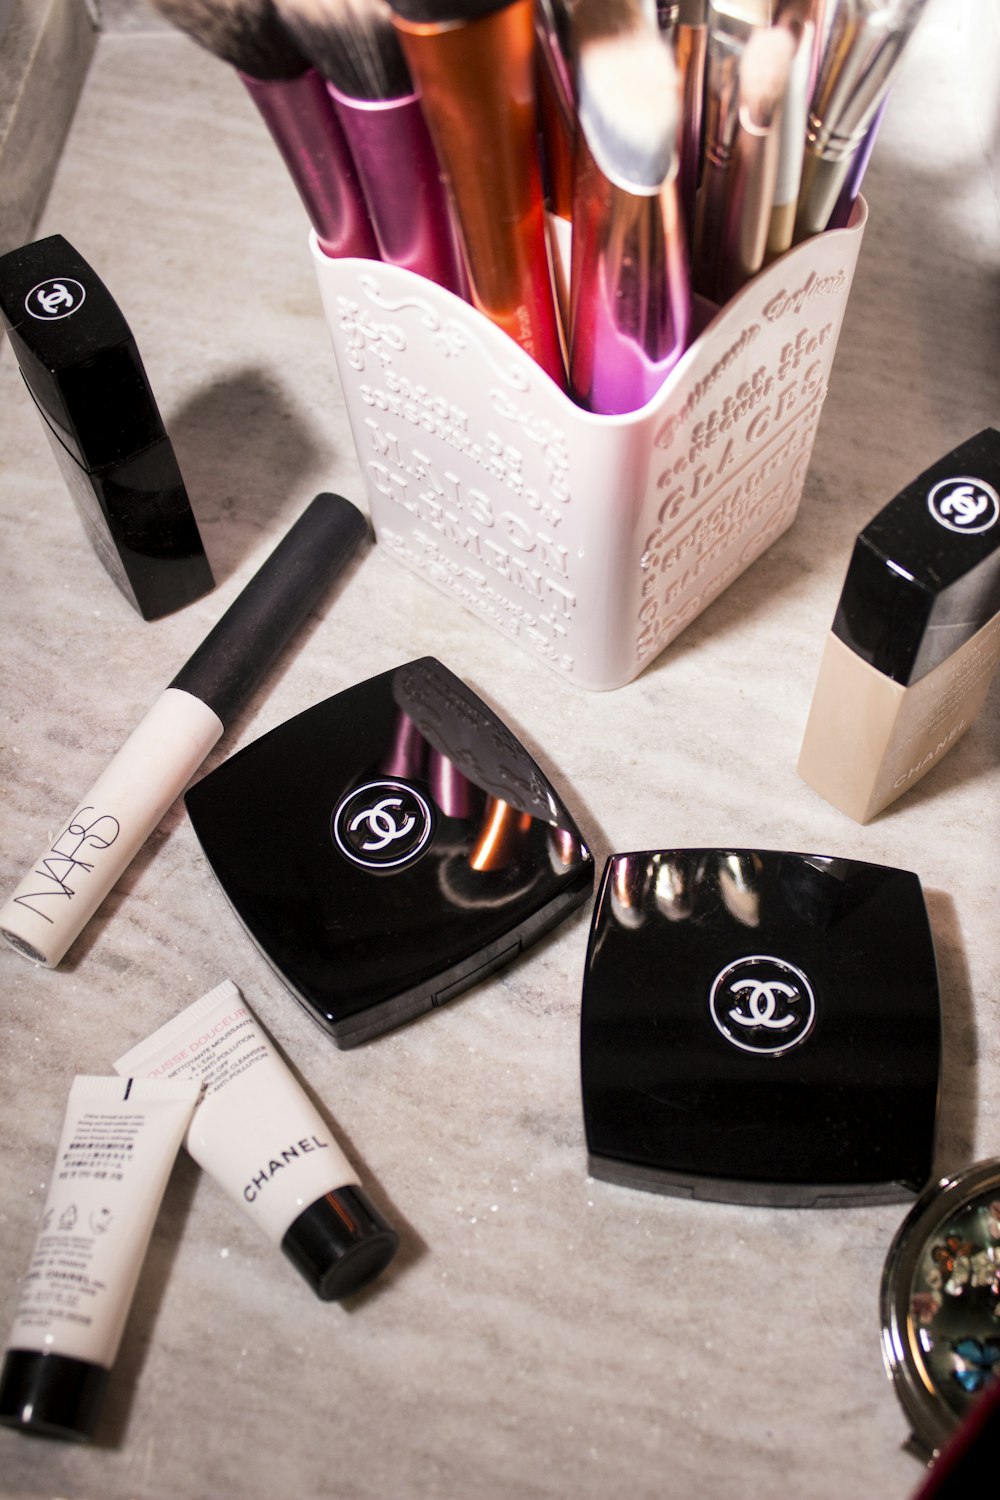 Chanel makeup set photo – Free Beauty Image on Unsplash